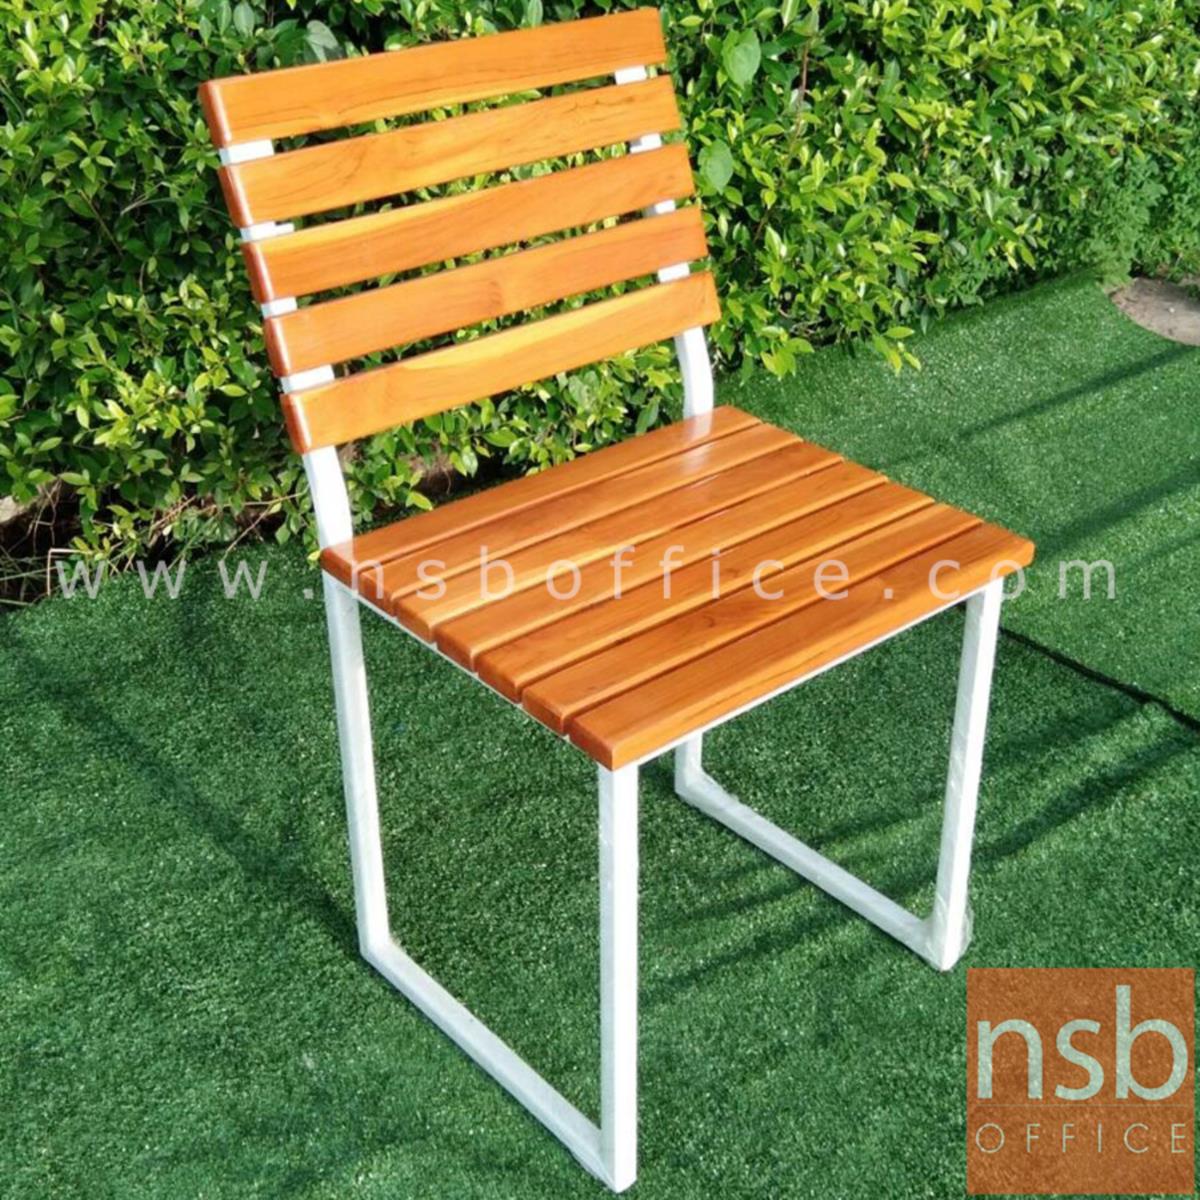 B29A329:เก้าอี้โมเดิร์นไม้ไม้ยางพาราทำสีสัก รุ่น PINEAPPLE ขนาด ขนาด 45W cm. ขาตัวยูสีขาว